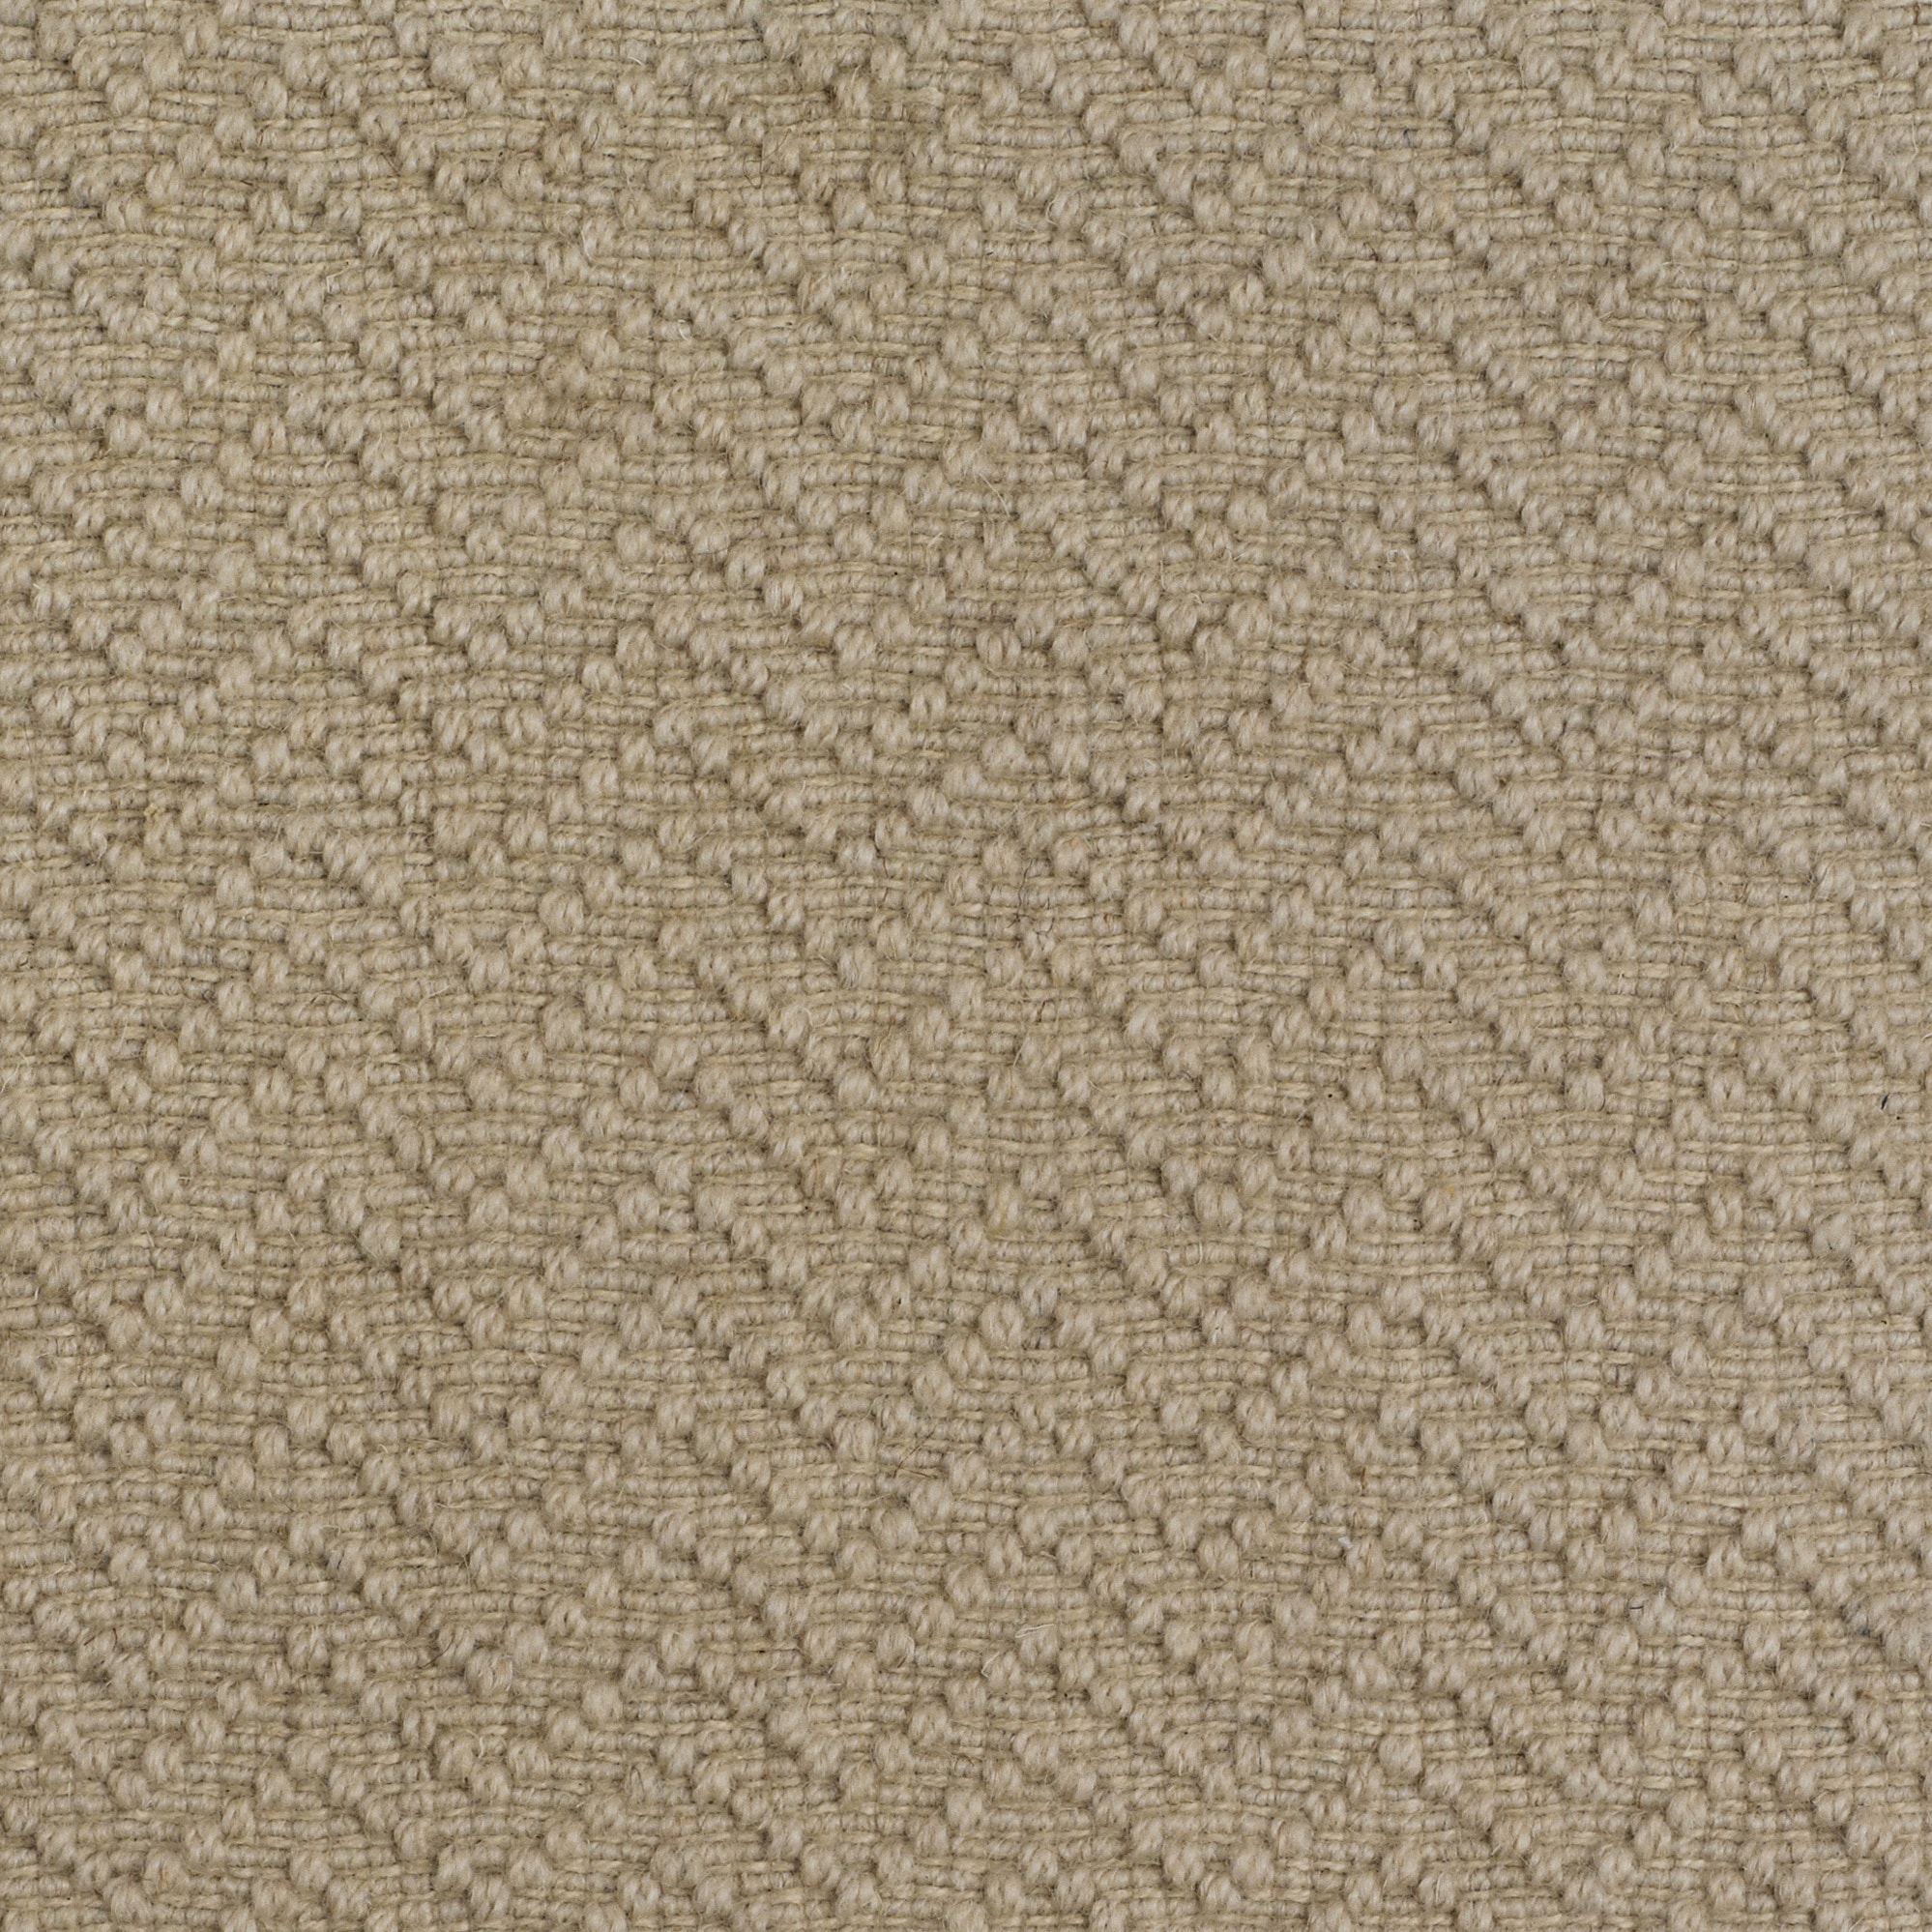 Royalty: Corn Silk - 100% New Zealand Wool Carpet